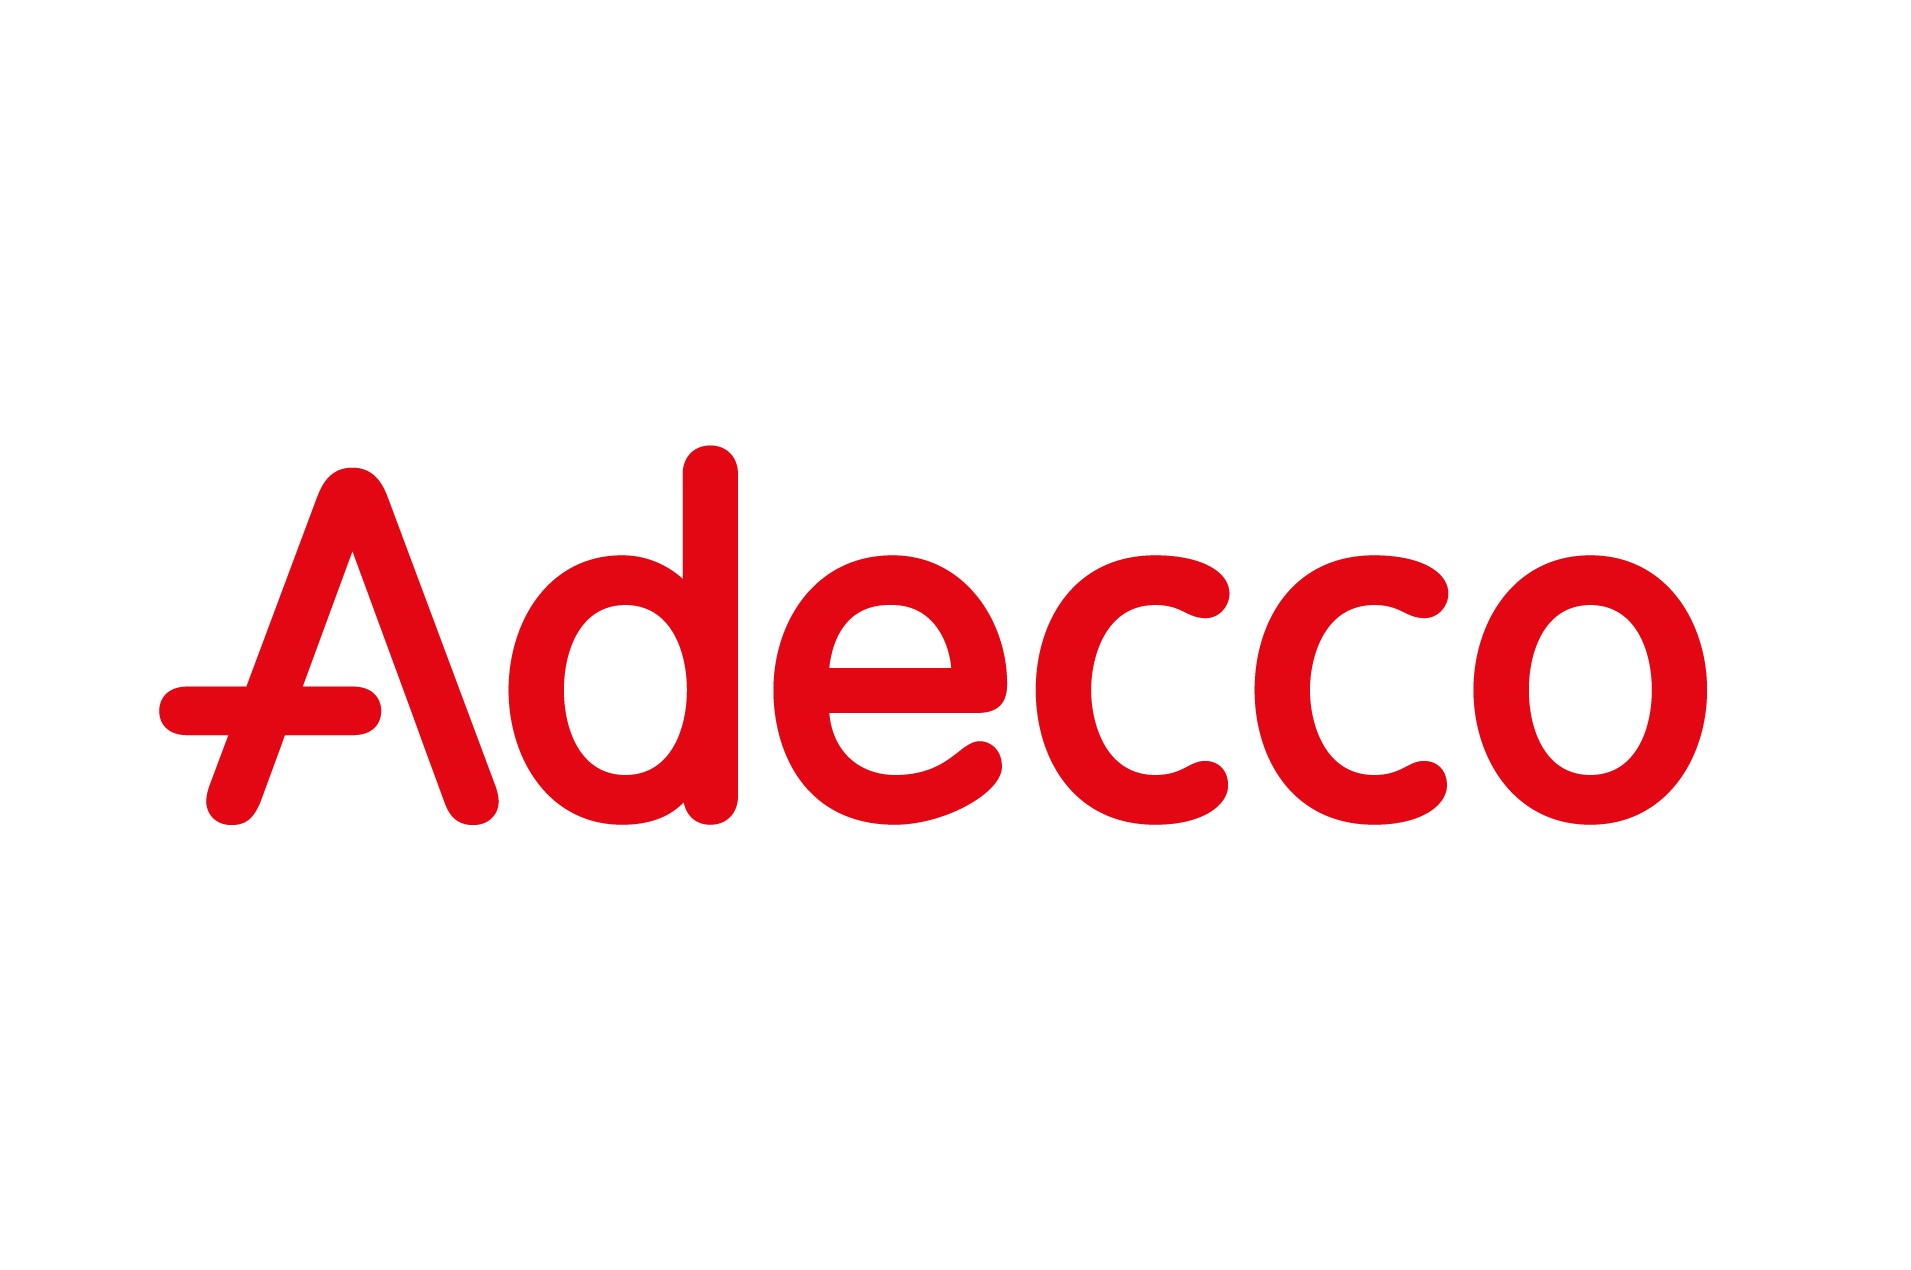 Addecco Logo